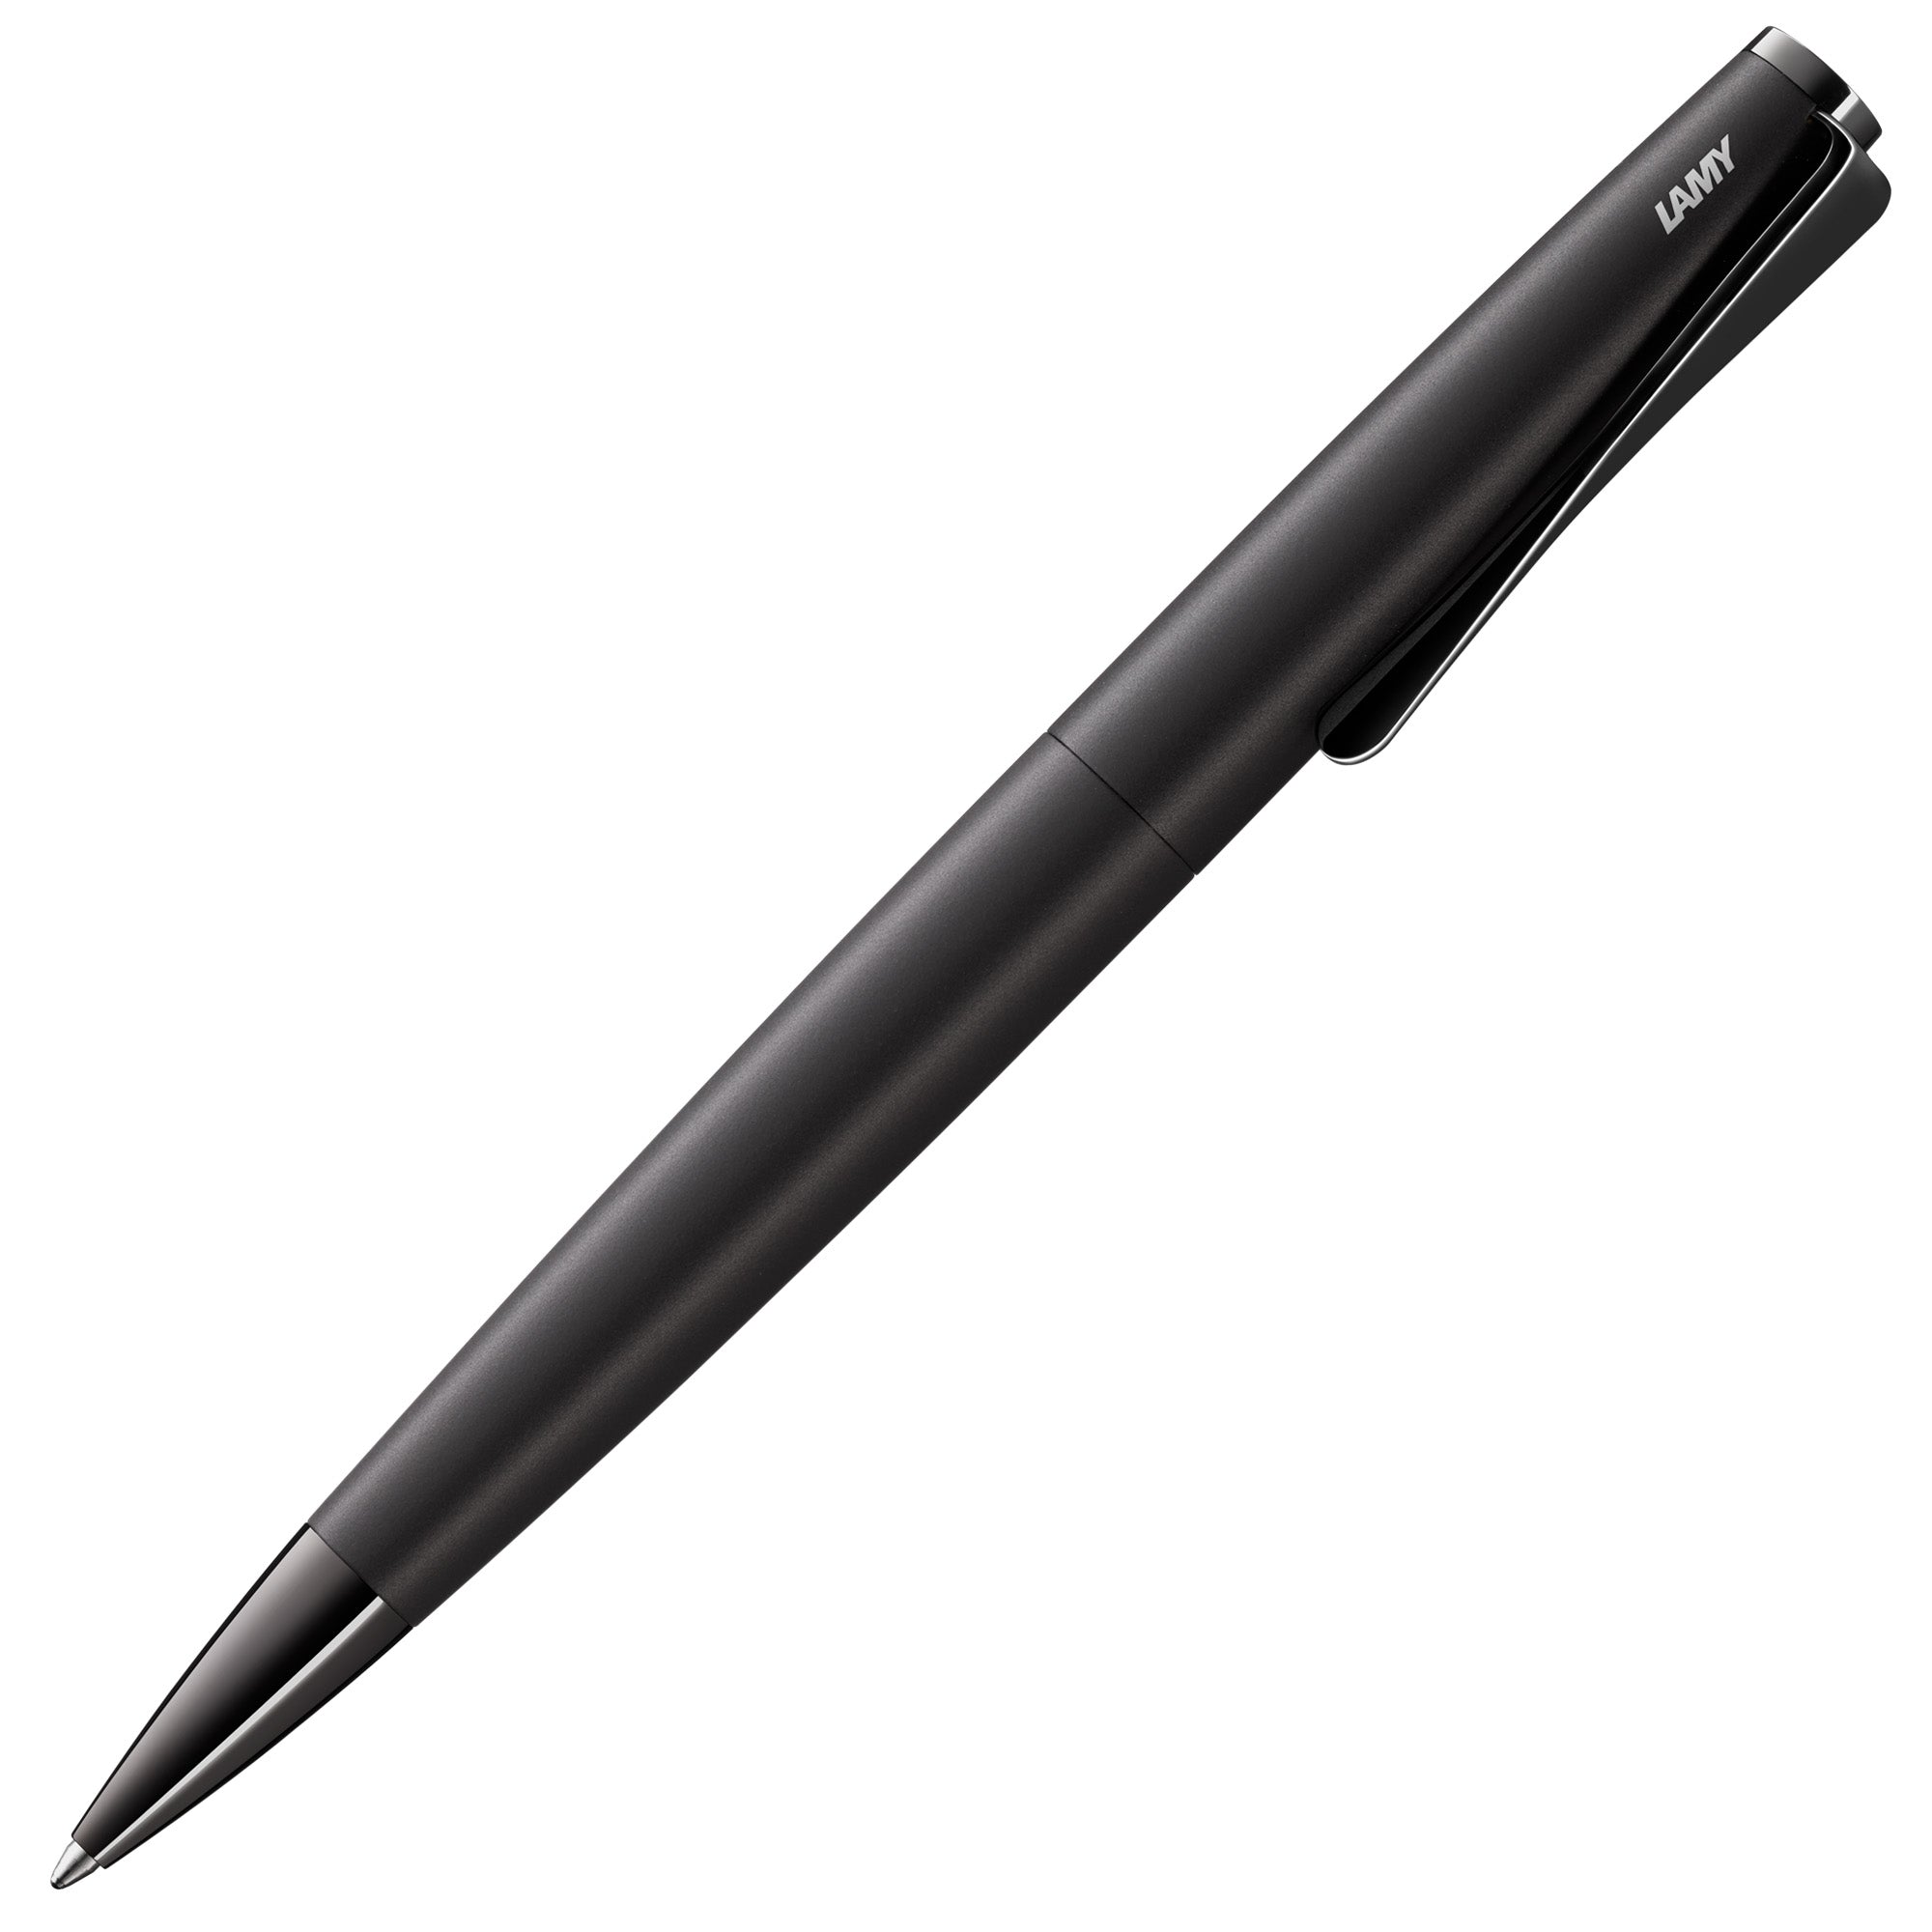 LAMY studio Lx all black ballpoint pen